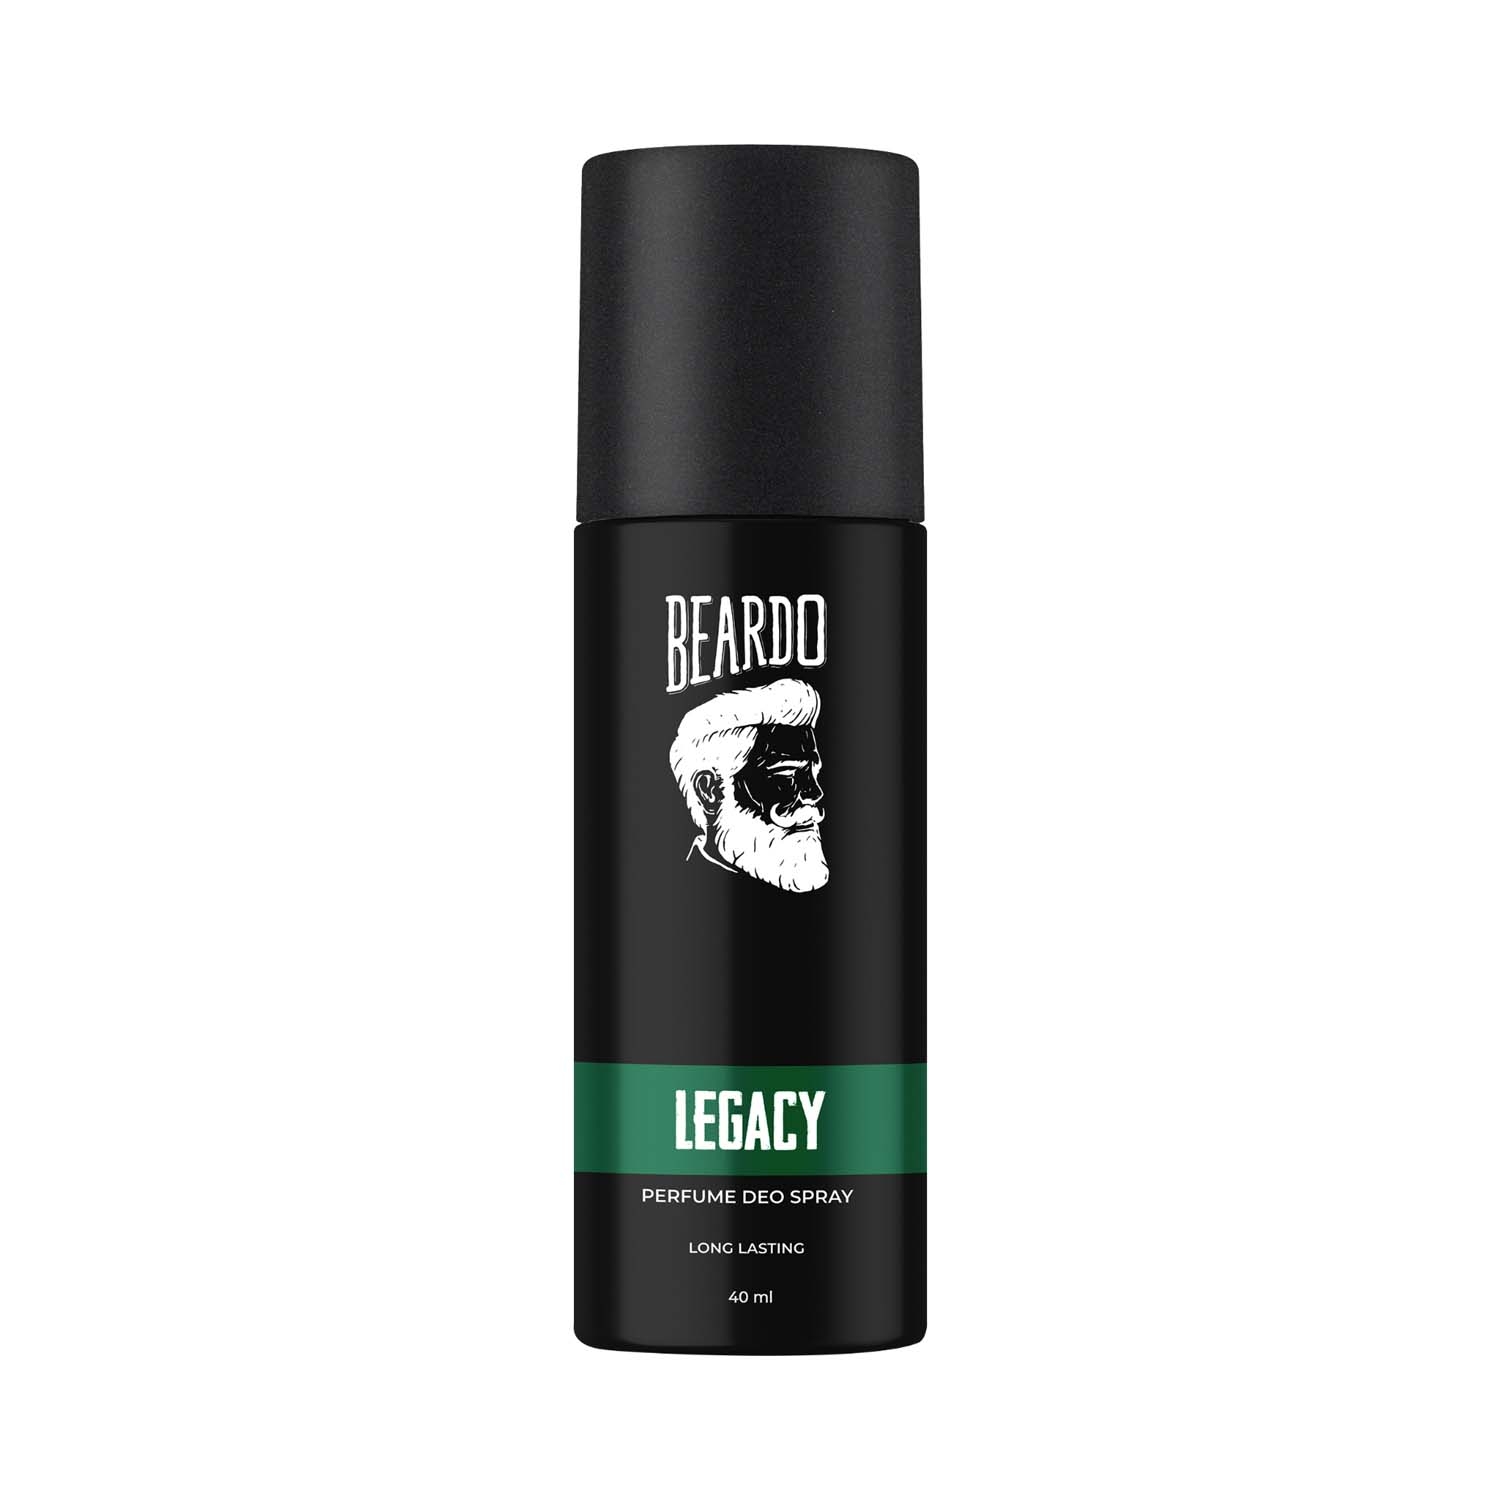 Beardo Legacy Perfume Deodorant Body Spray (40ml)